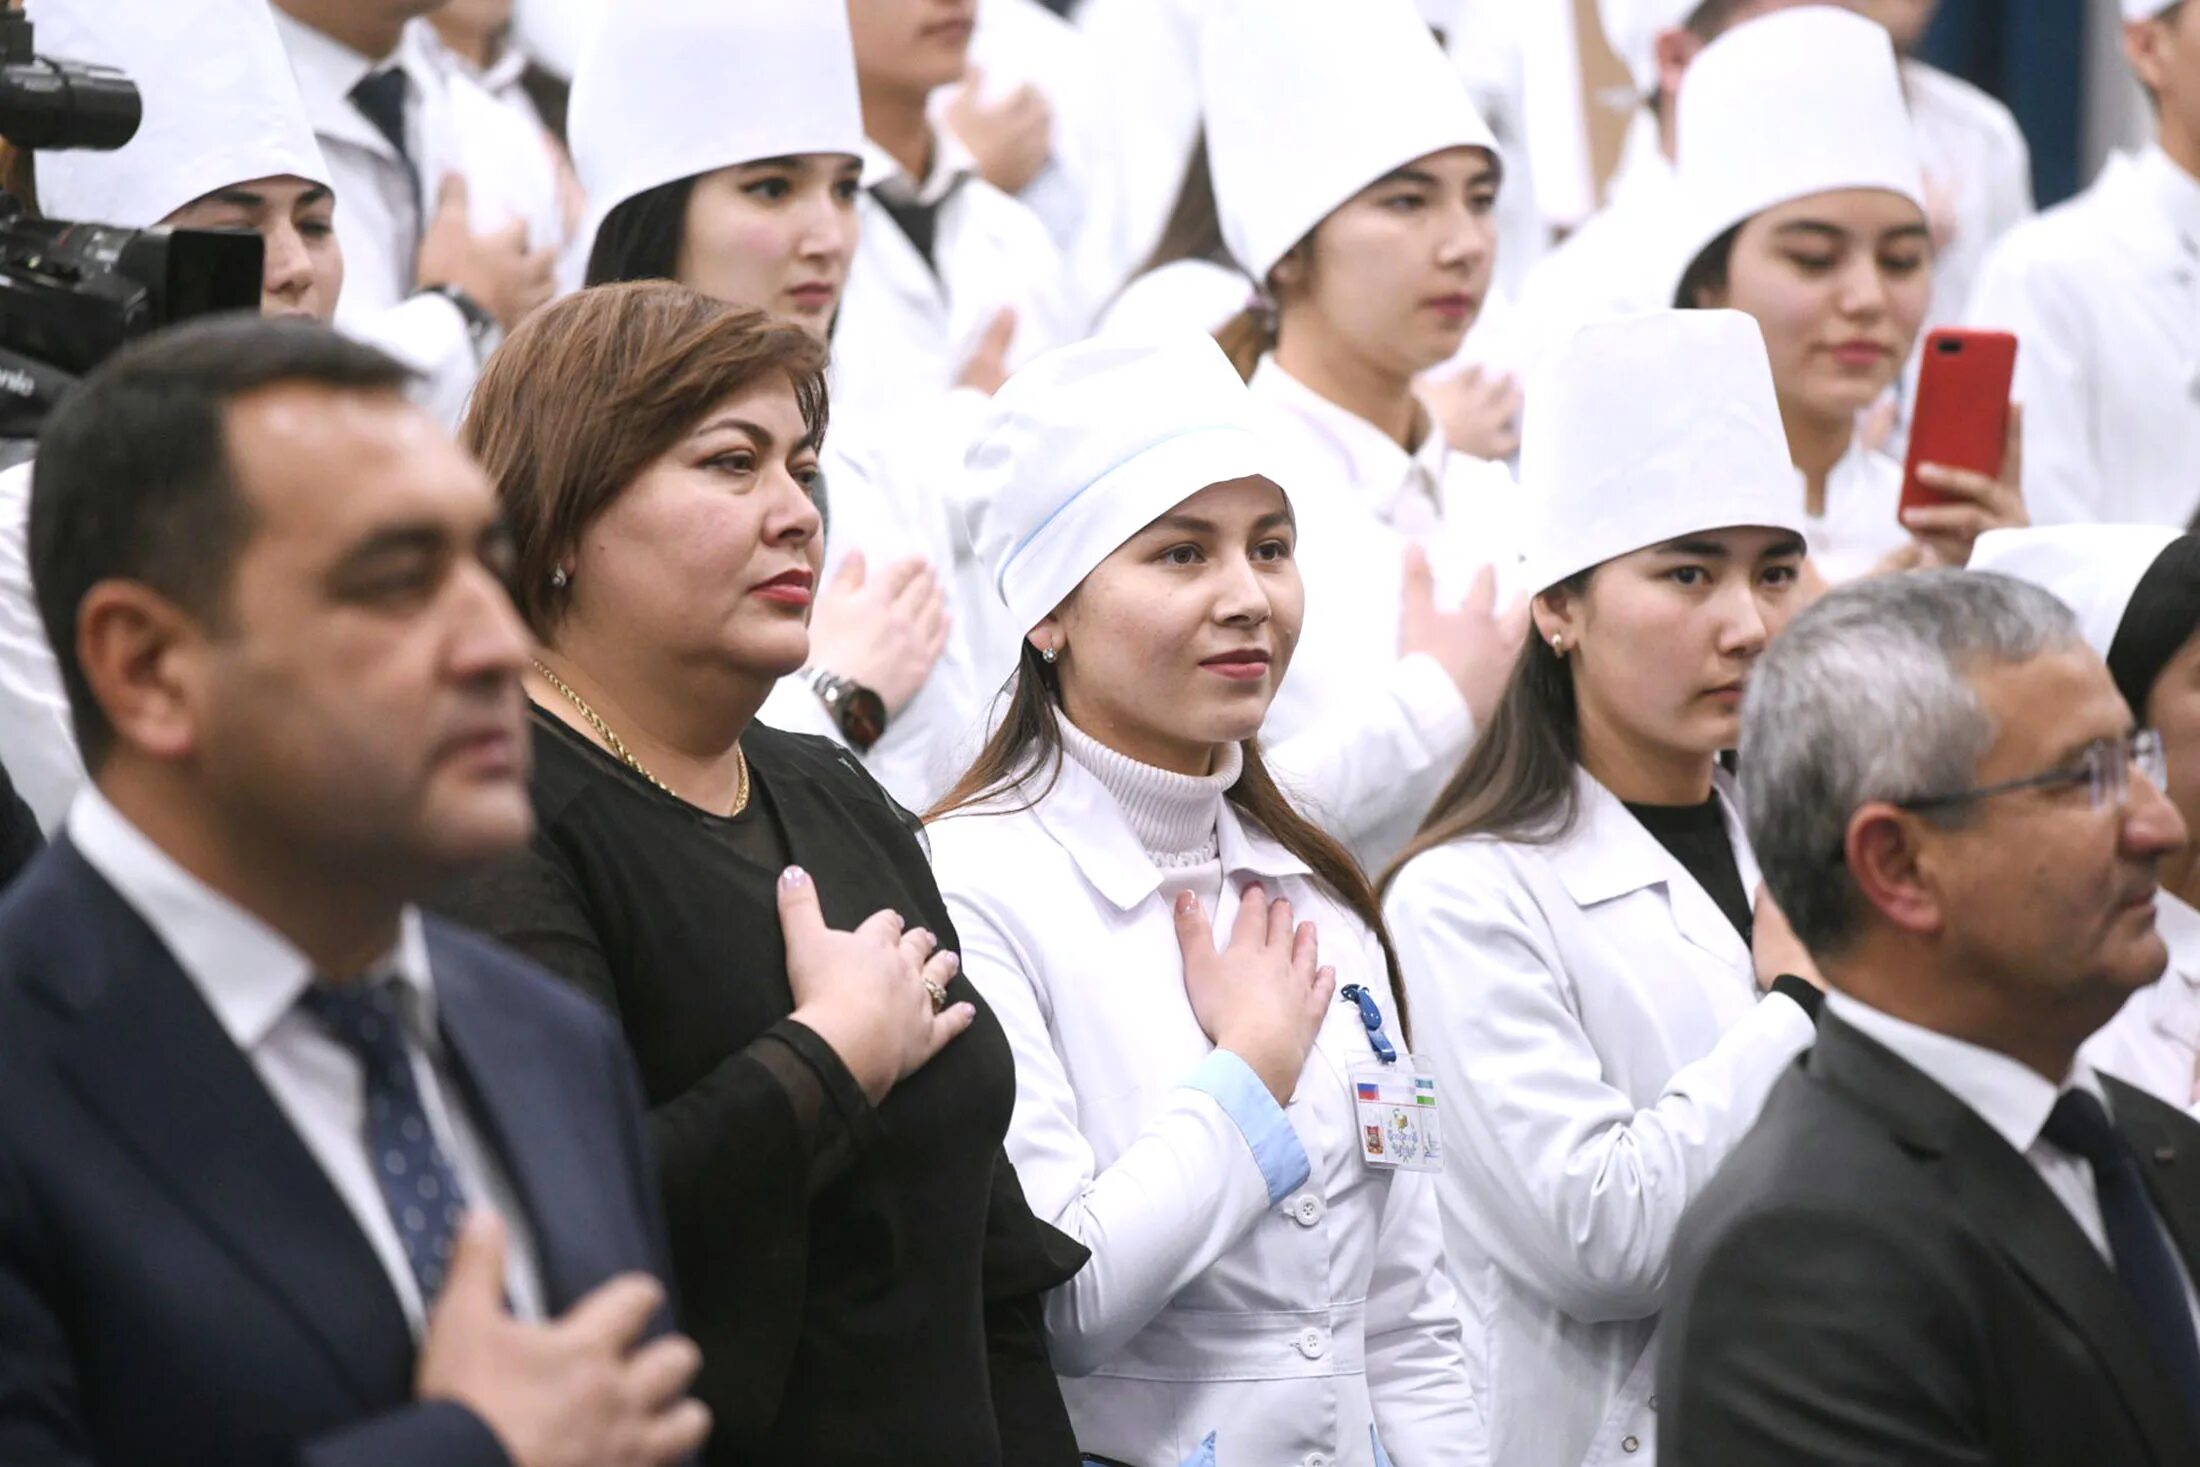 Медики клятва Гиппократа. Врачи дают клятву. Студенты Узбекистана. Студенты-медики клятву Гиппократа. Клятва врача 14